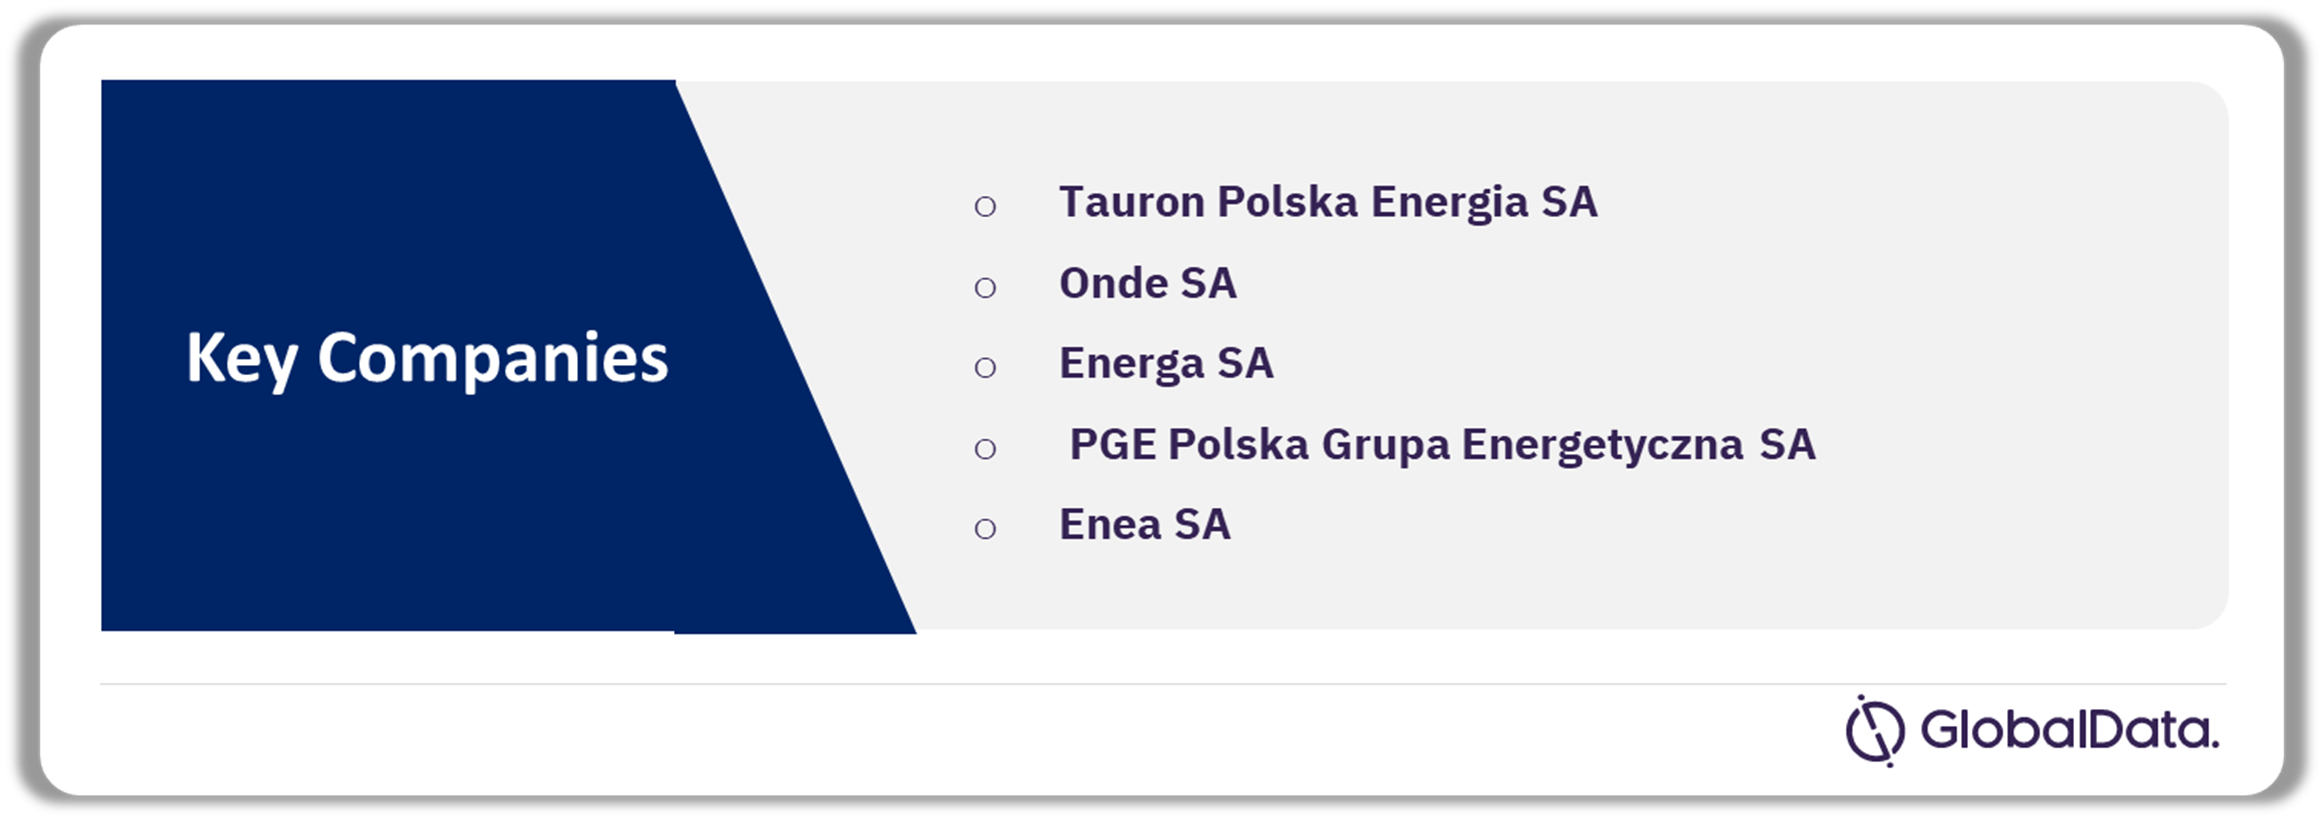 Poland Wind Power Market Analysis by Companies